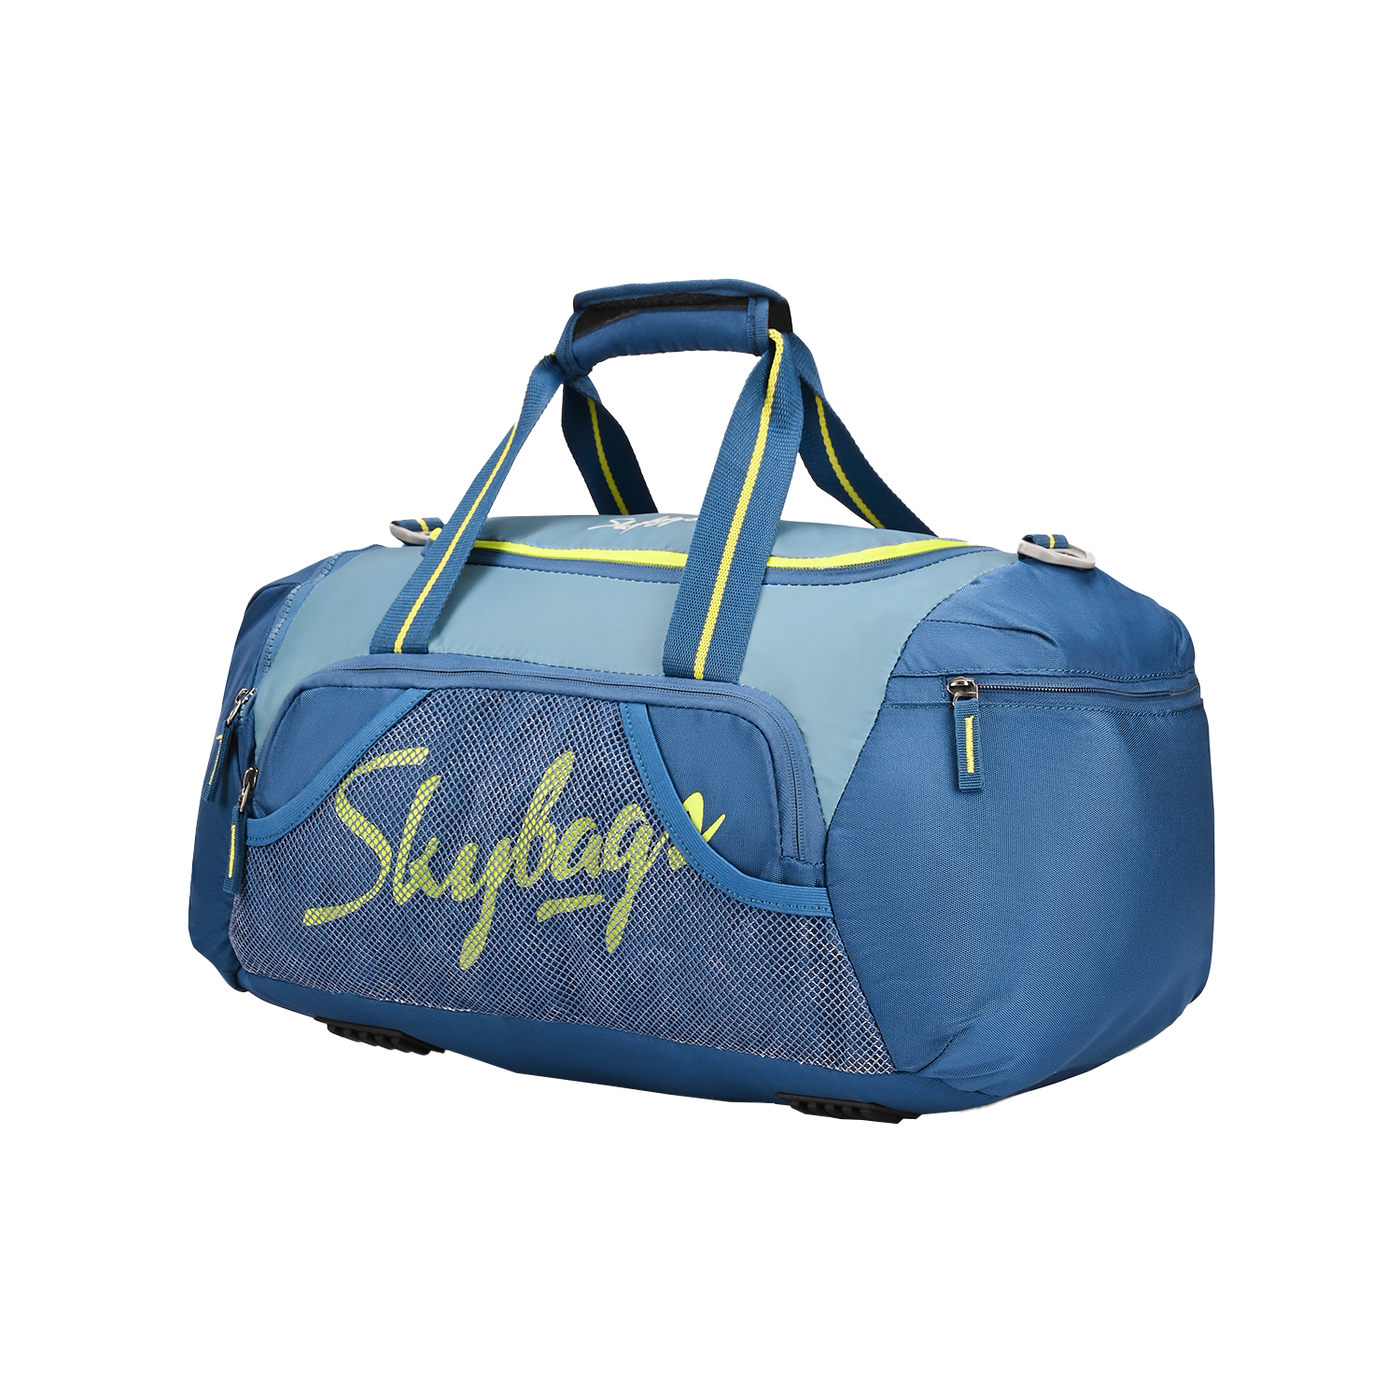 Skybags Athletix Unisex Gym Duffle